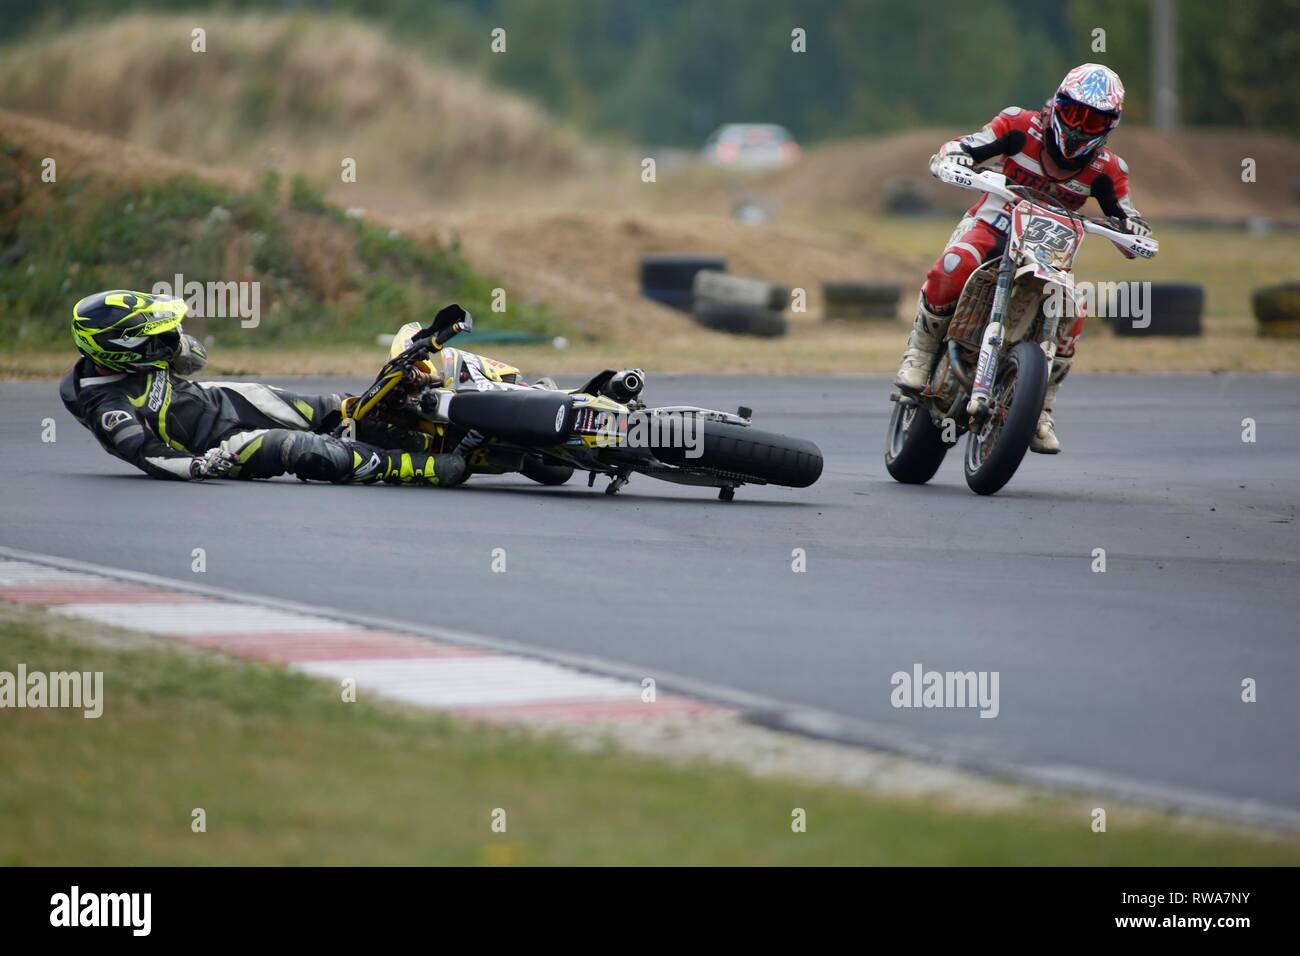 Motorcycle crash during motorcycle races, Czech Republic Stock Photo